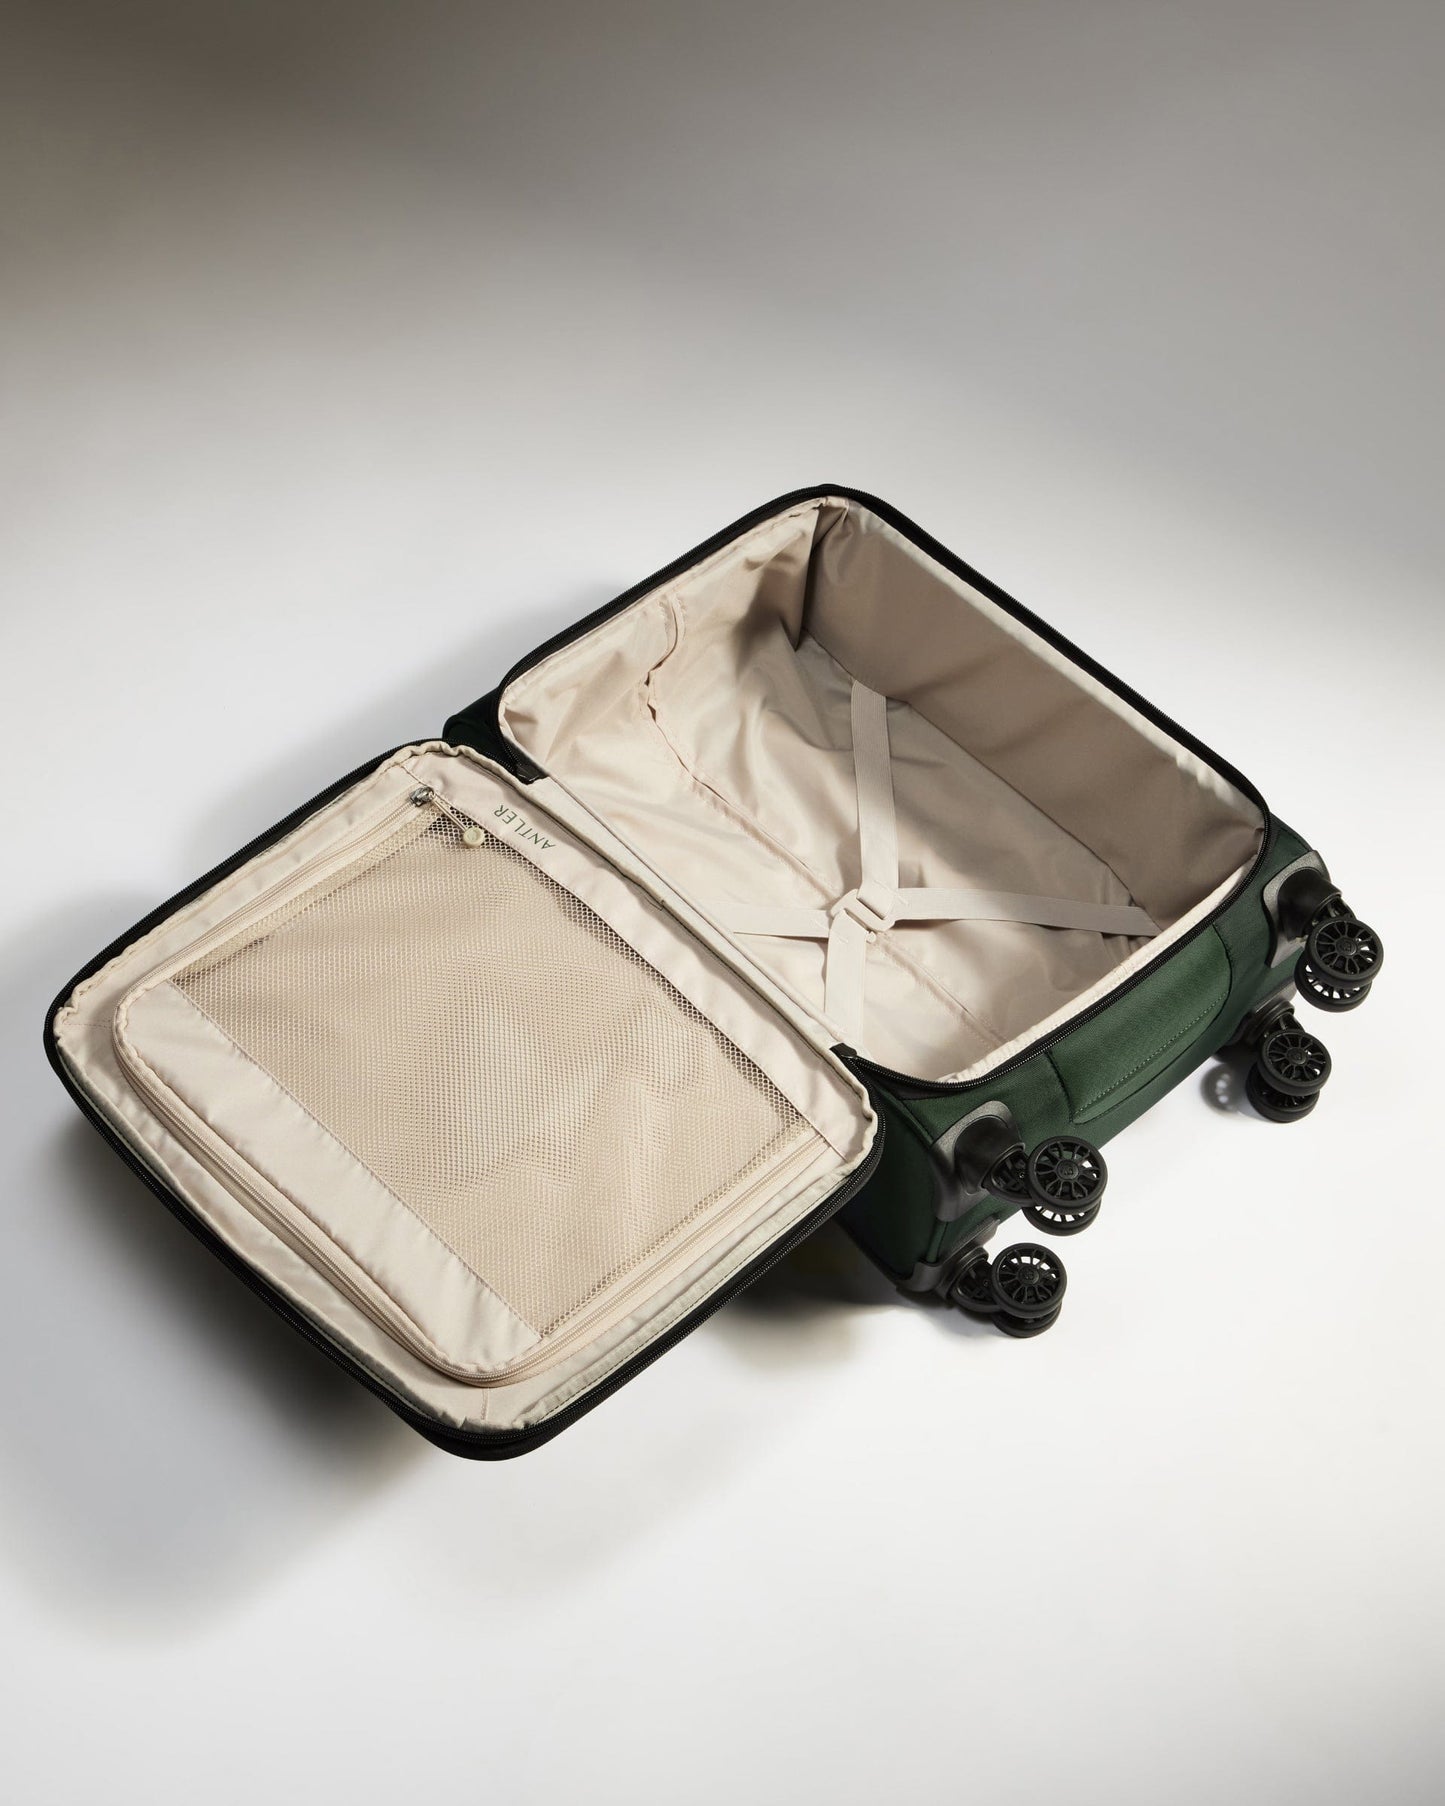 Antler Luggage -  Soft Stripe Cabin in Green - Soft Suitcase Soft Stripe Cabin in Green | Soft Suitcase | Cabin Bag